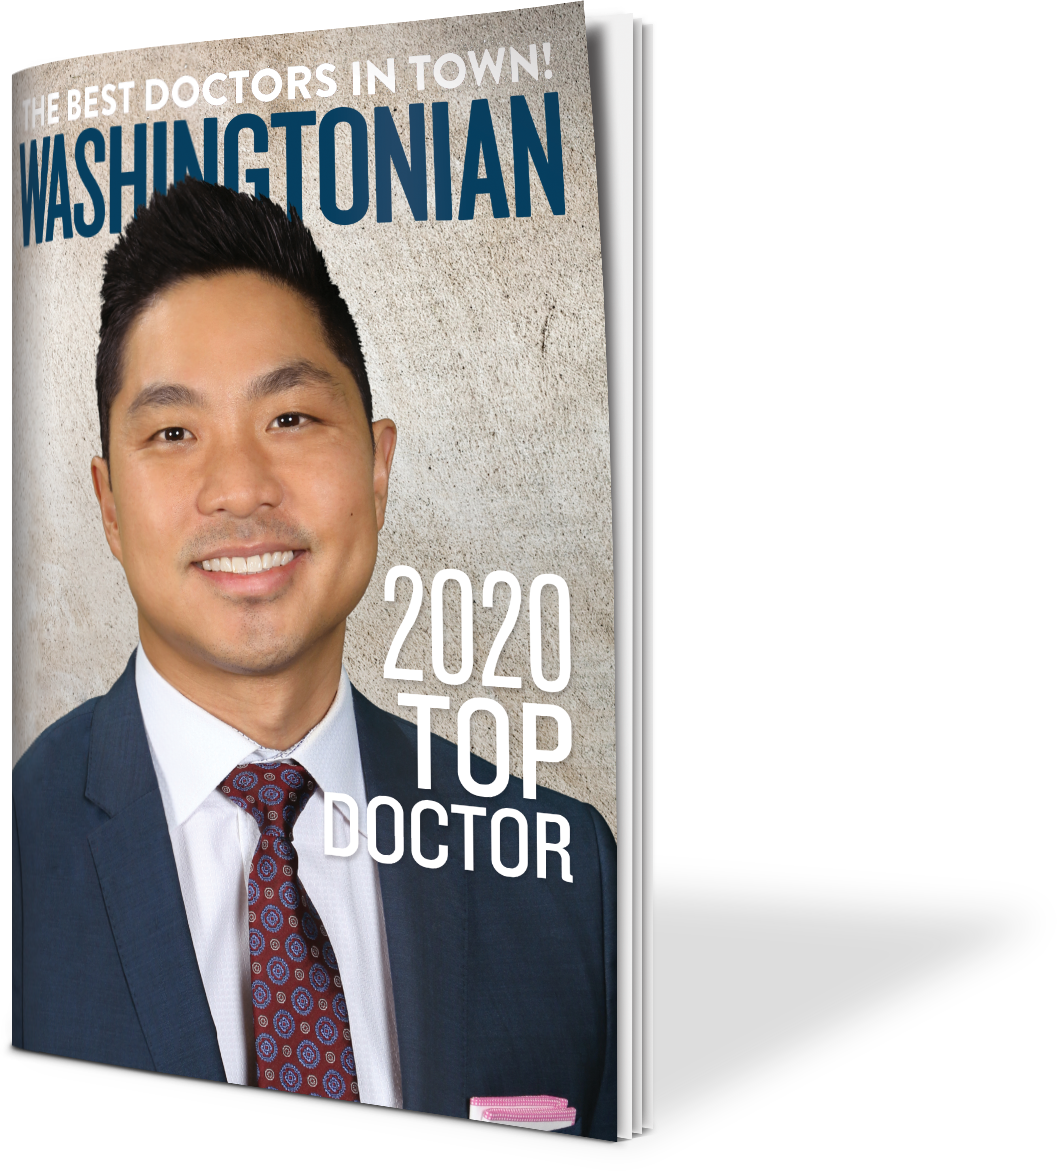 Dr. Lee on the Washingtonian Magazine Cover